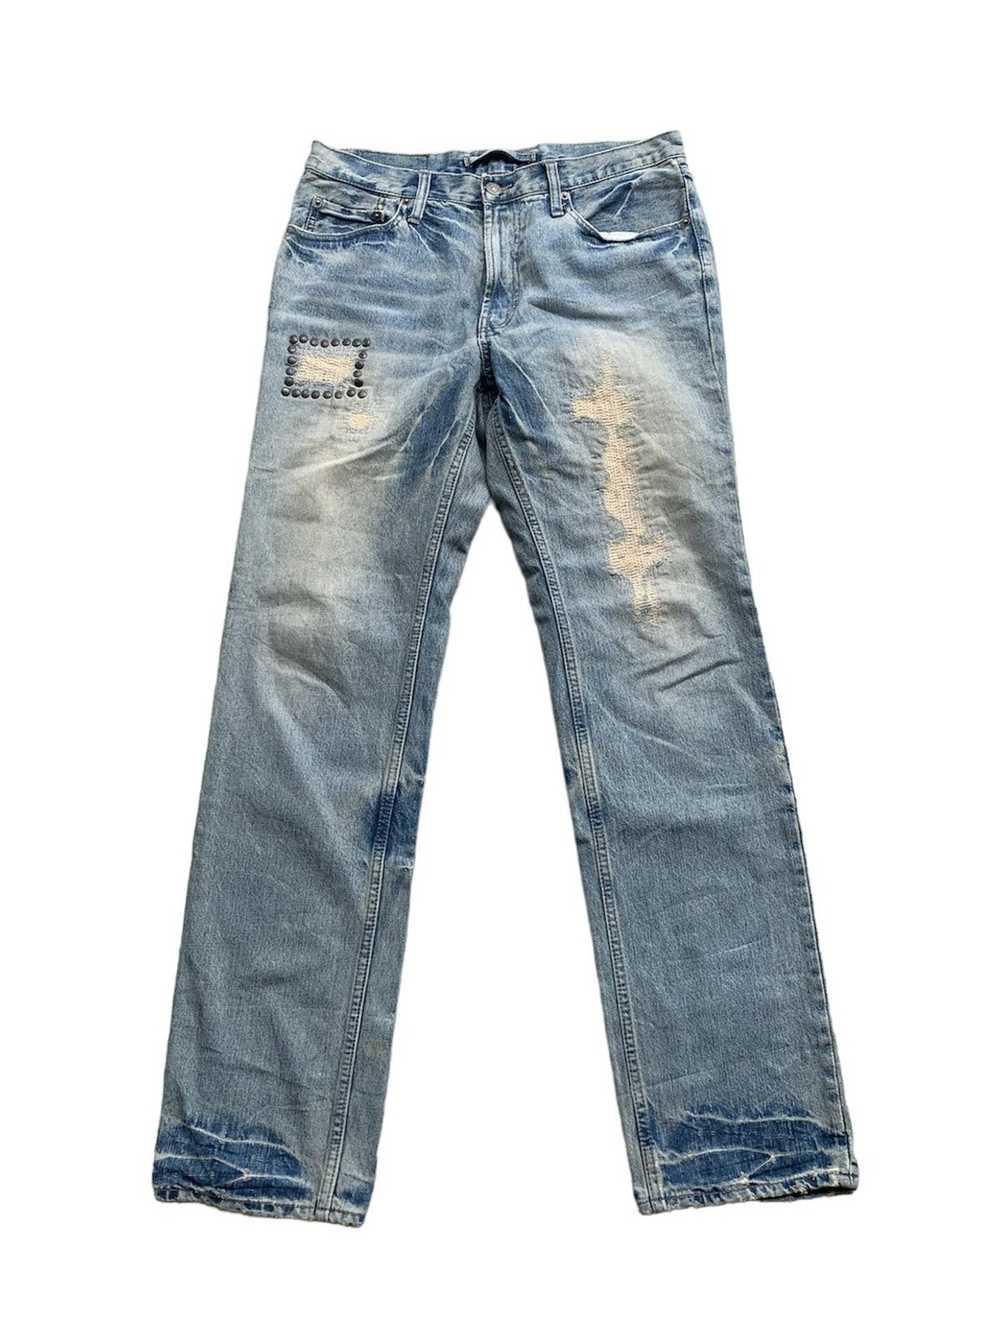 PPFM PPFM Distressed Denim Jeans - image 1